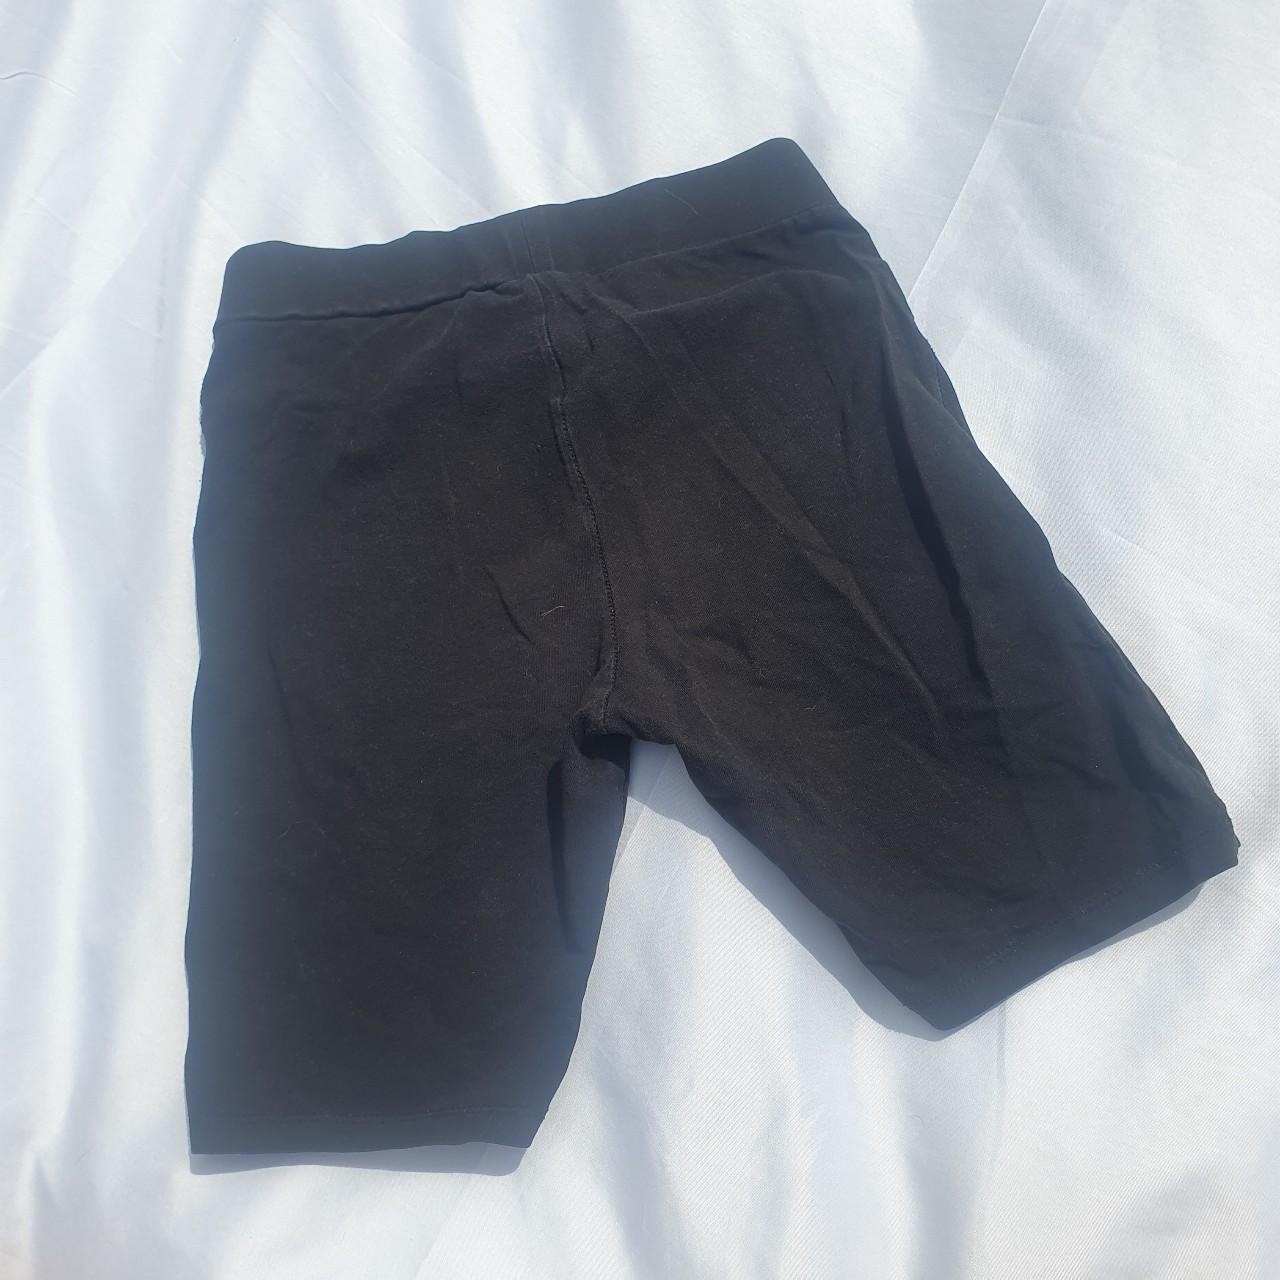 black biker shorts new look size 6 posted 2nd class - Depop